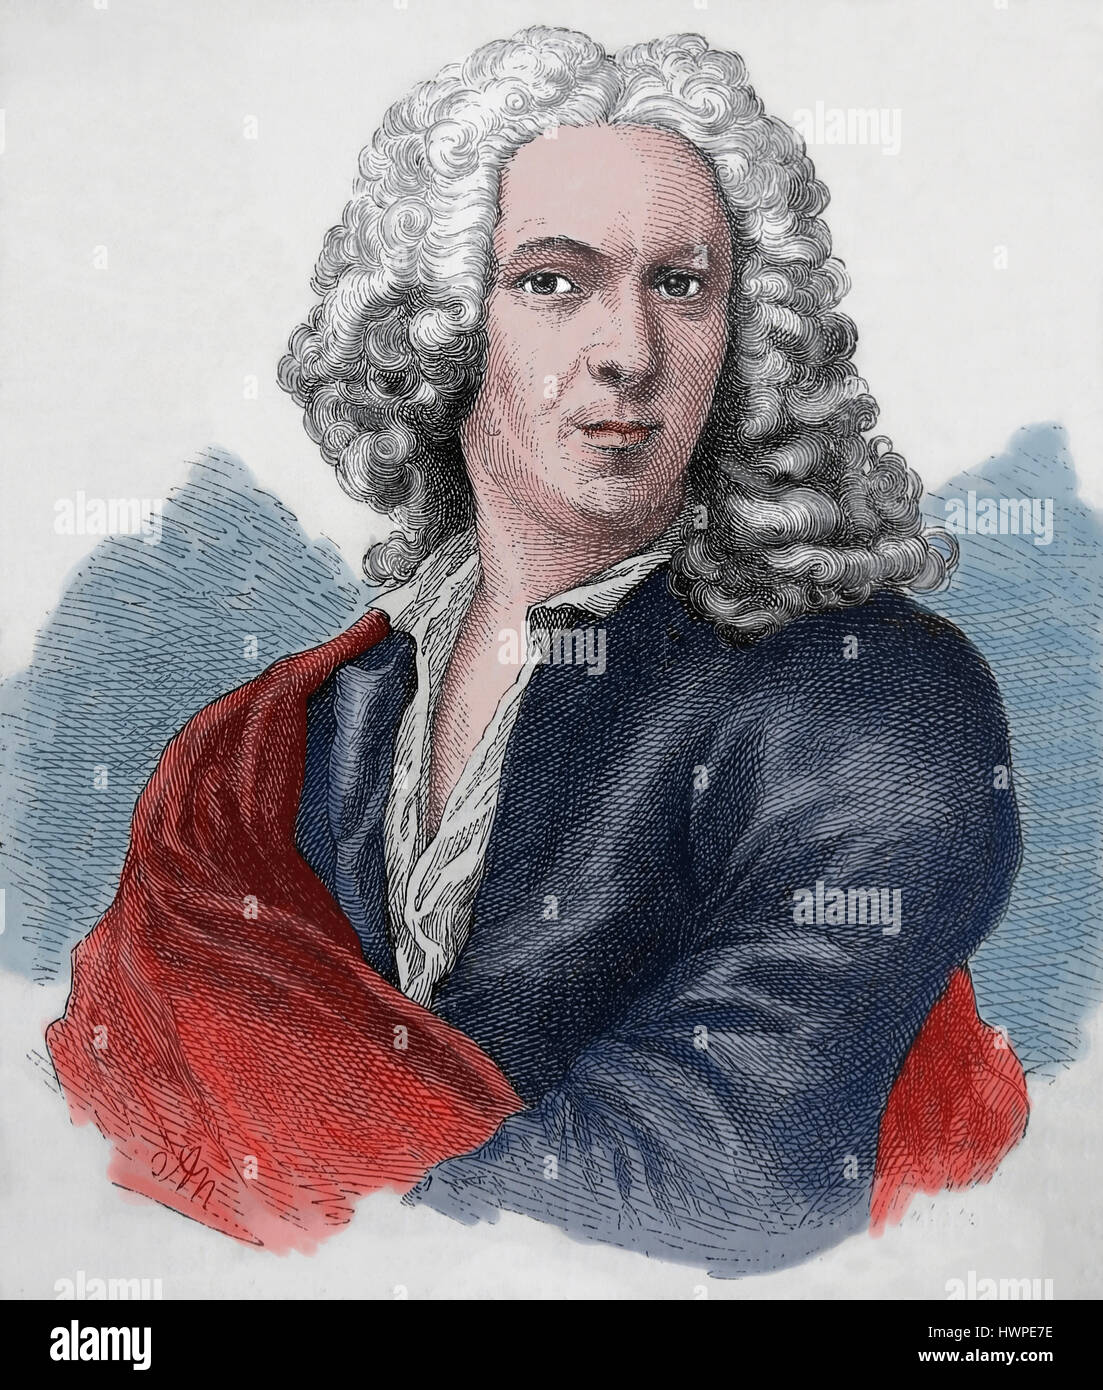 Carl Linnaeus (1707-1778). Swedish botanist, physician and zoologist. Portrait. Engraving, 1883. Color. Stock Photo